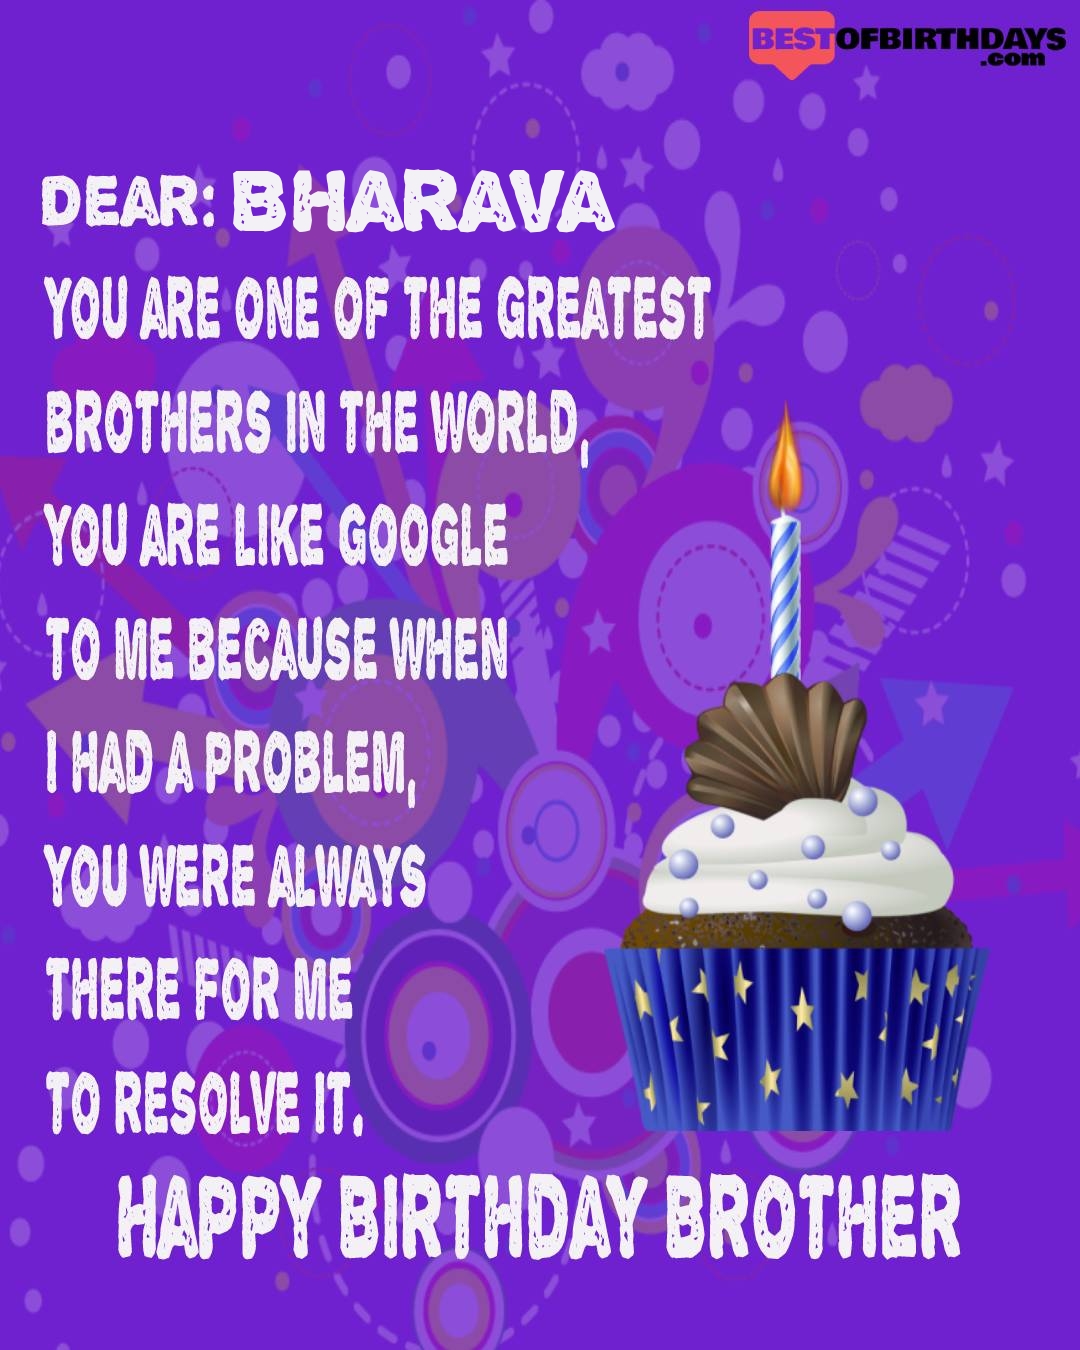 Happy birthday bharava bhai brother bro